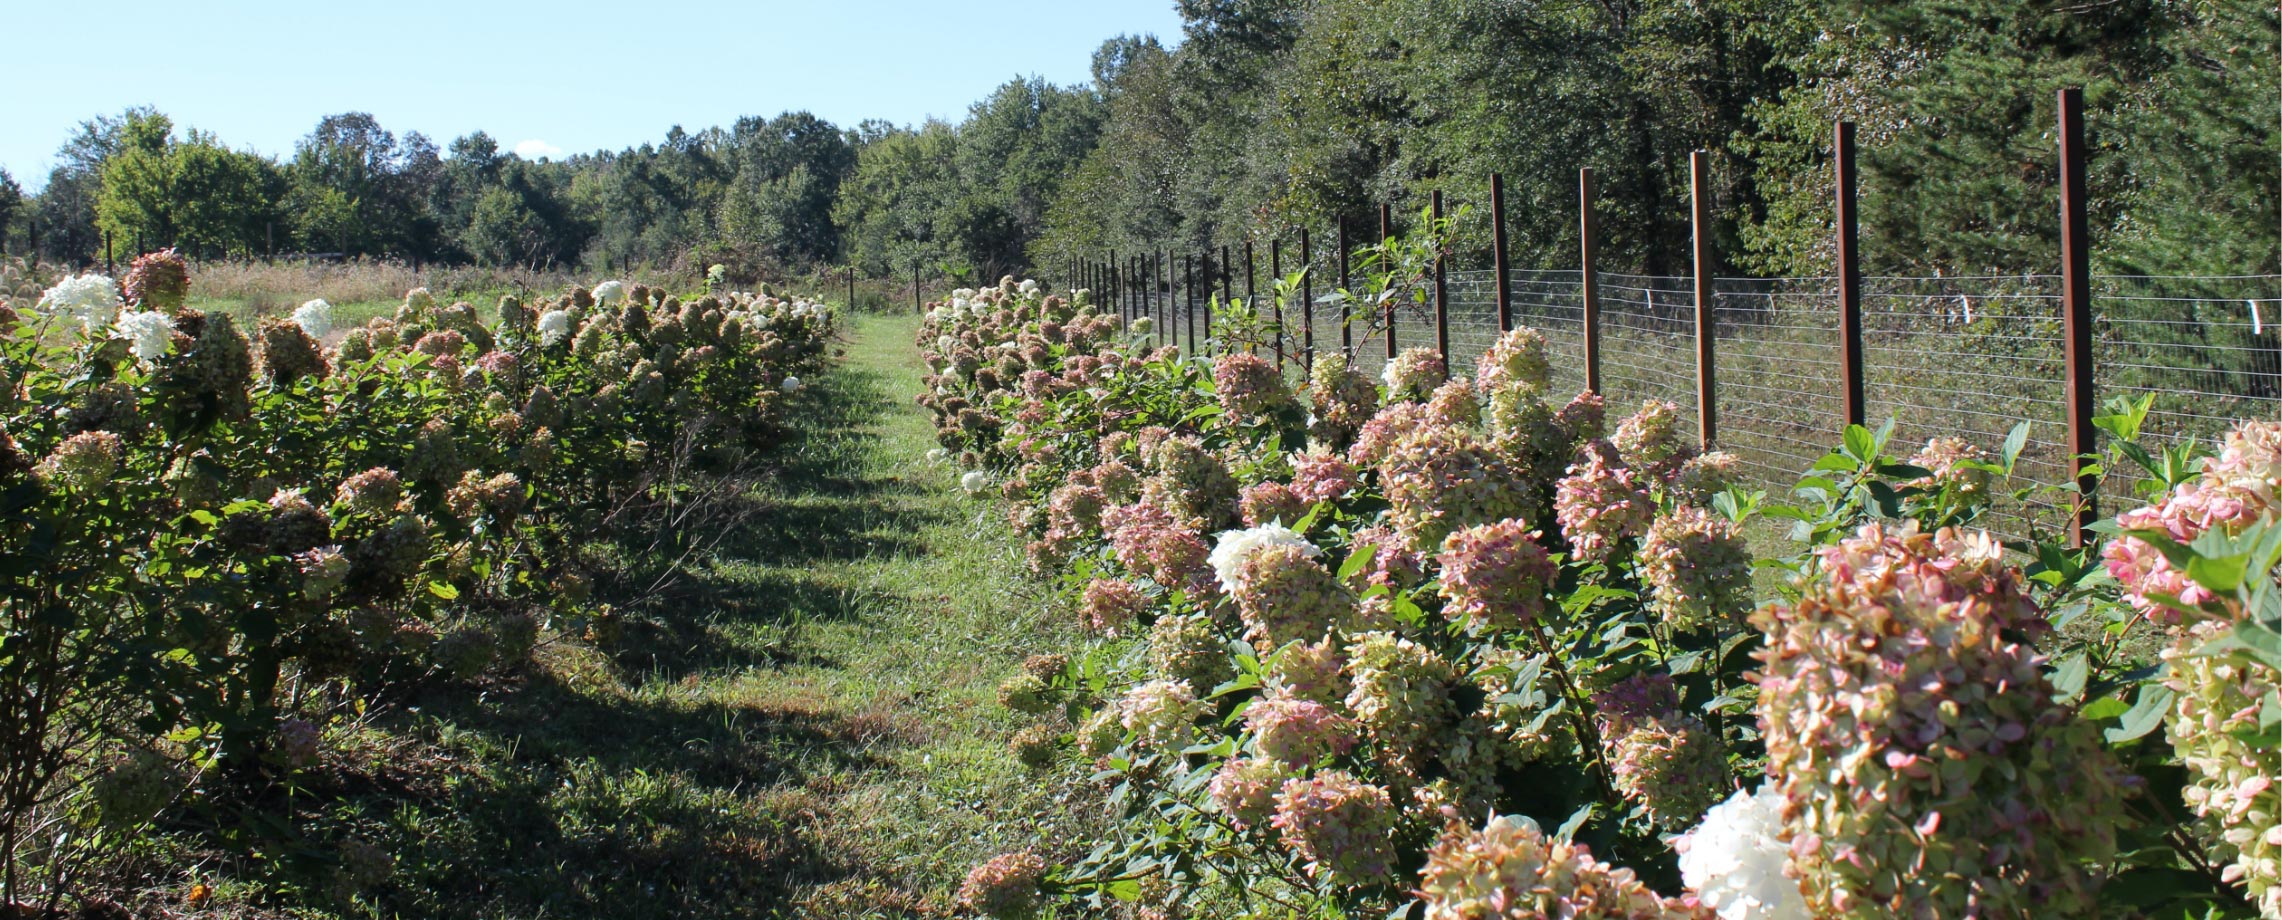 Rows of Hydrangeas on the farm in October